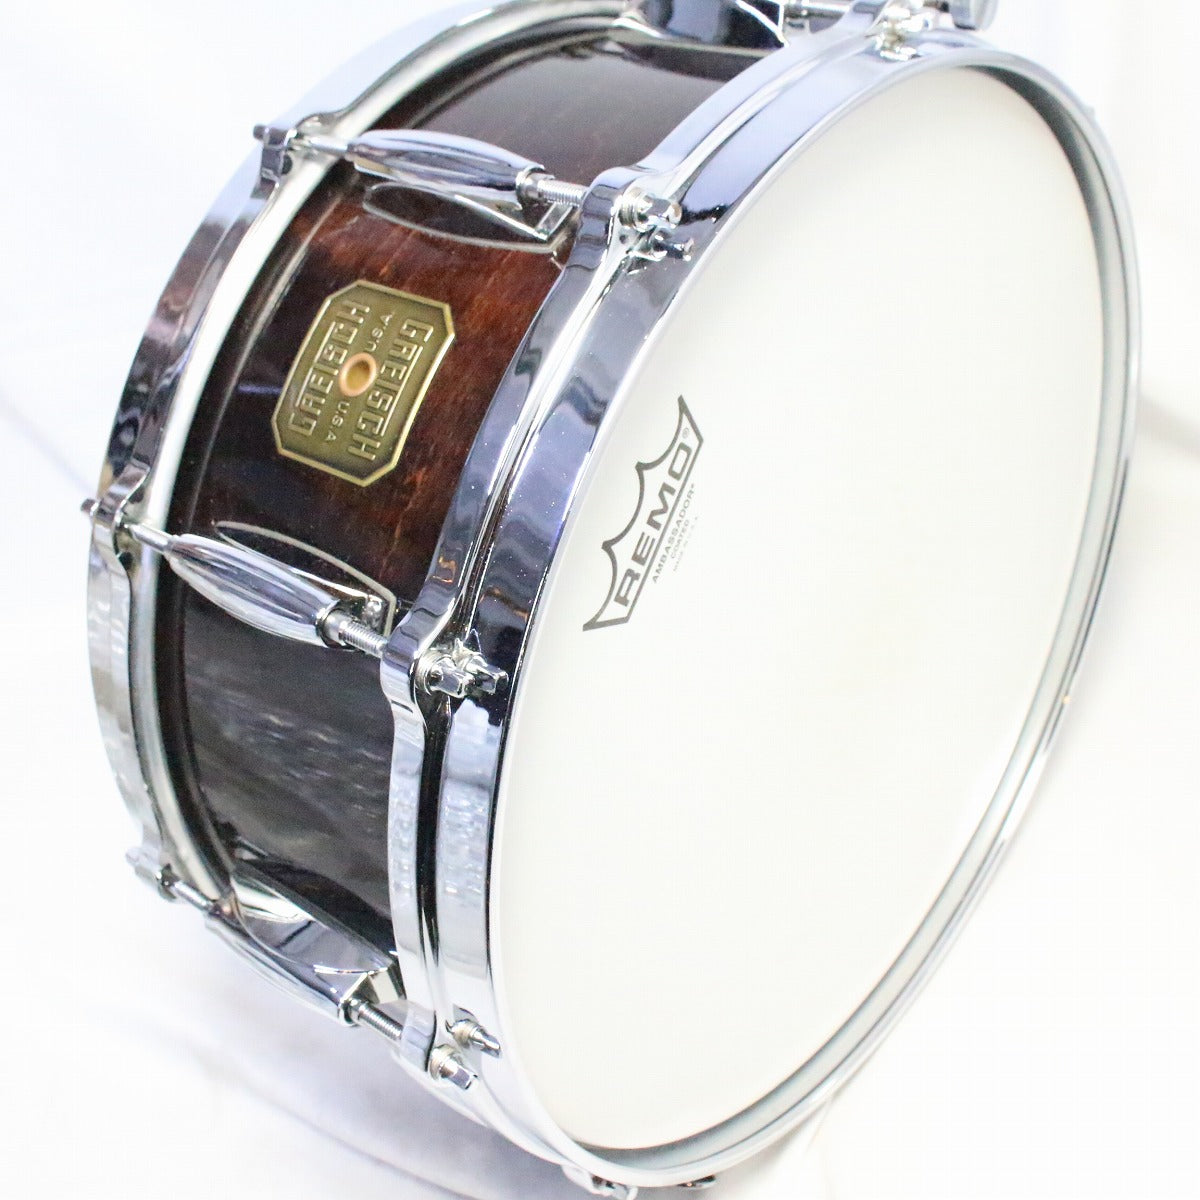 USED GRETSCH / 90s G-4158 14x5.5 Gretsch USA Custom Snare Drum [08]